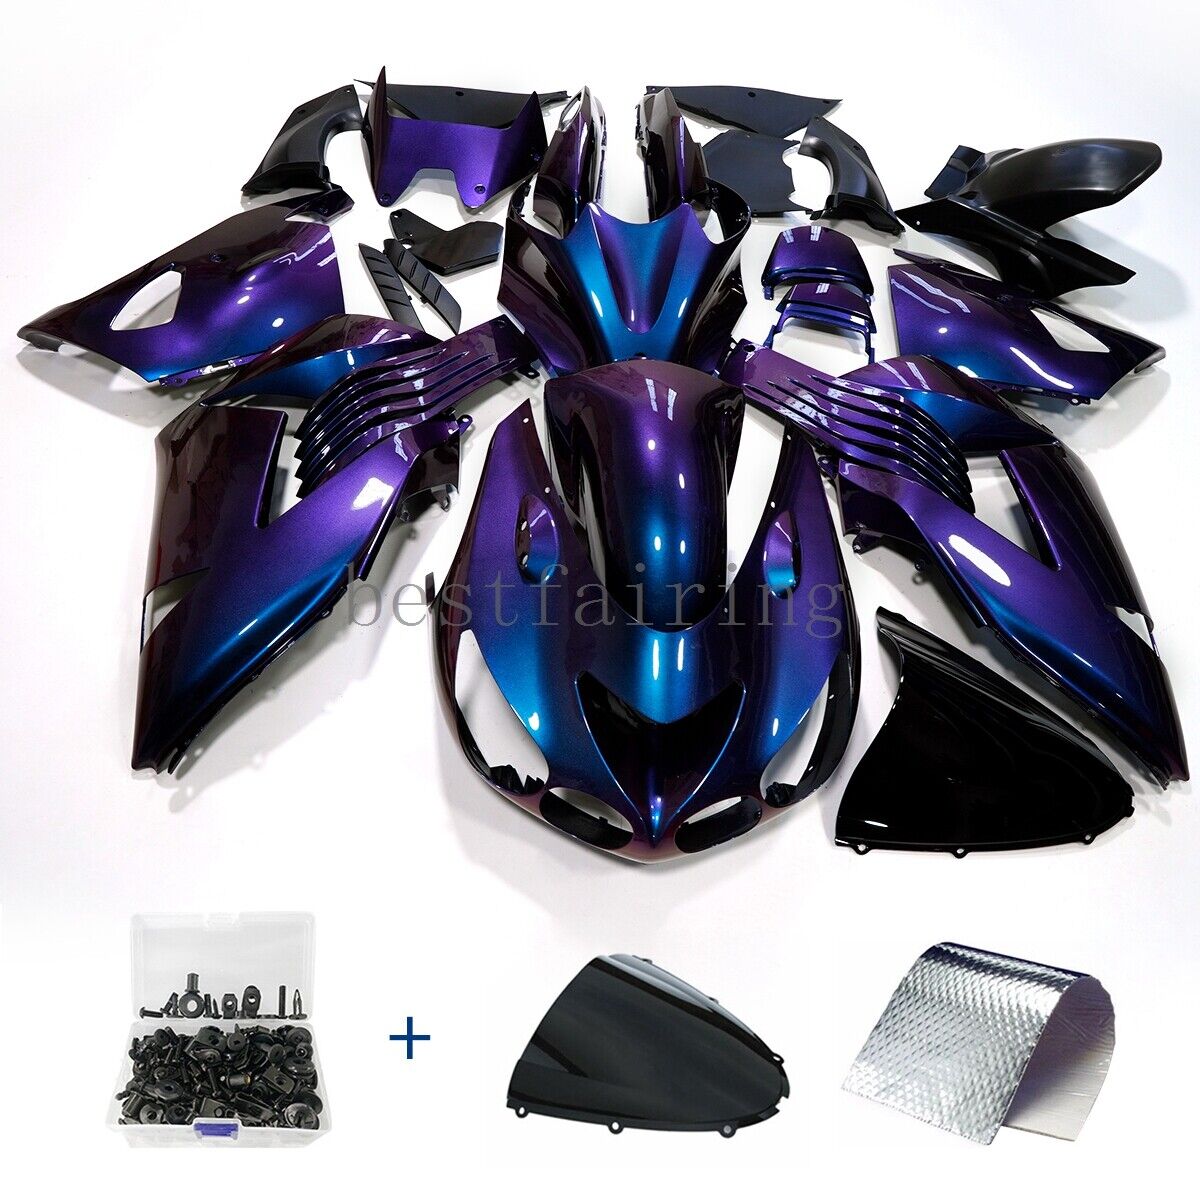 Chameleon Purple Blue Fairing for Kawasaki Ninja ZX14R 2006-2011 Body Kit +Bolts